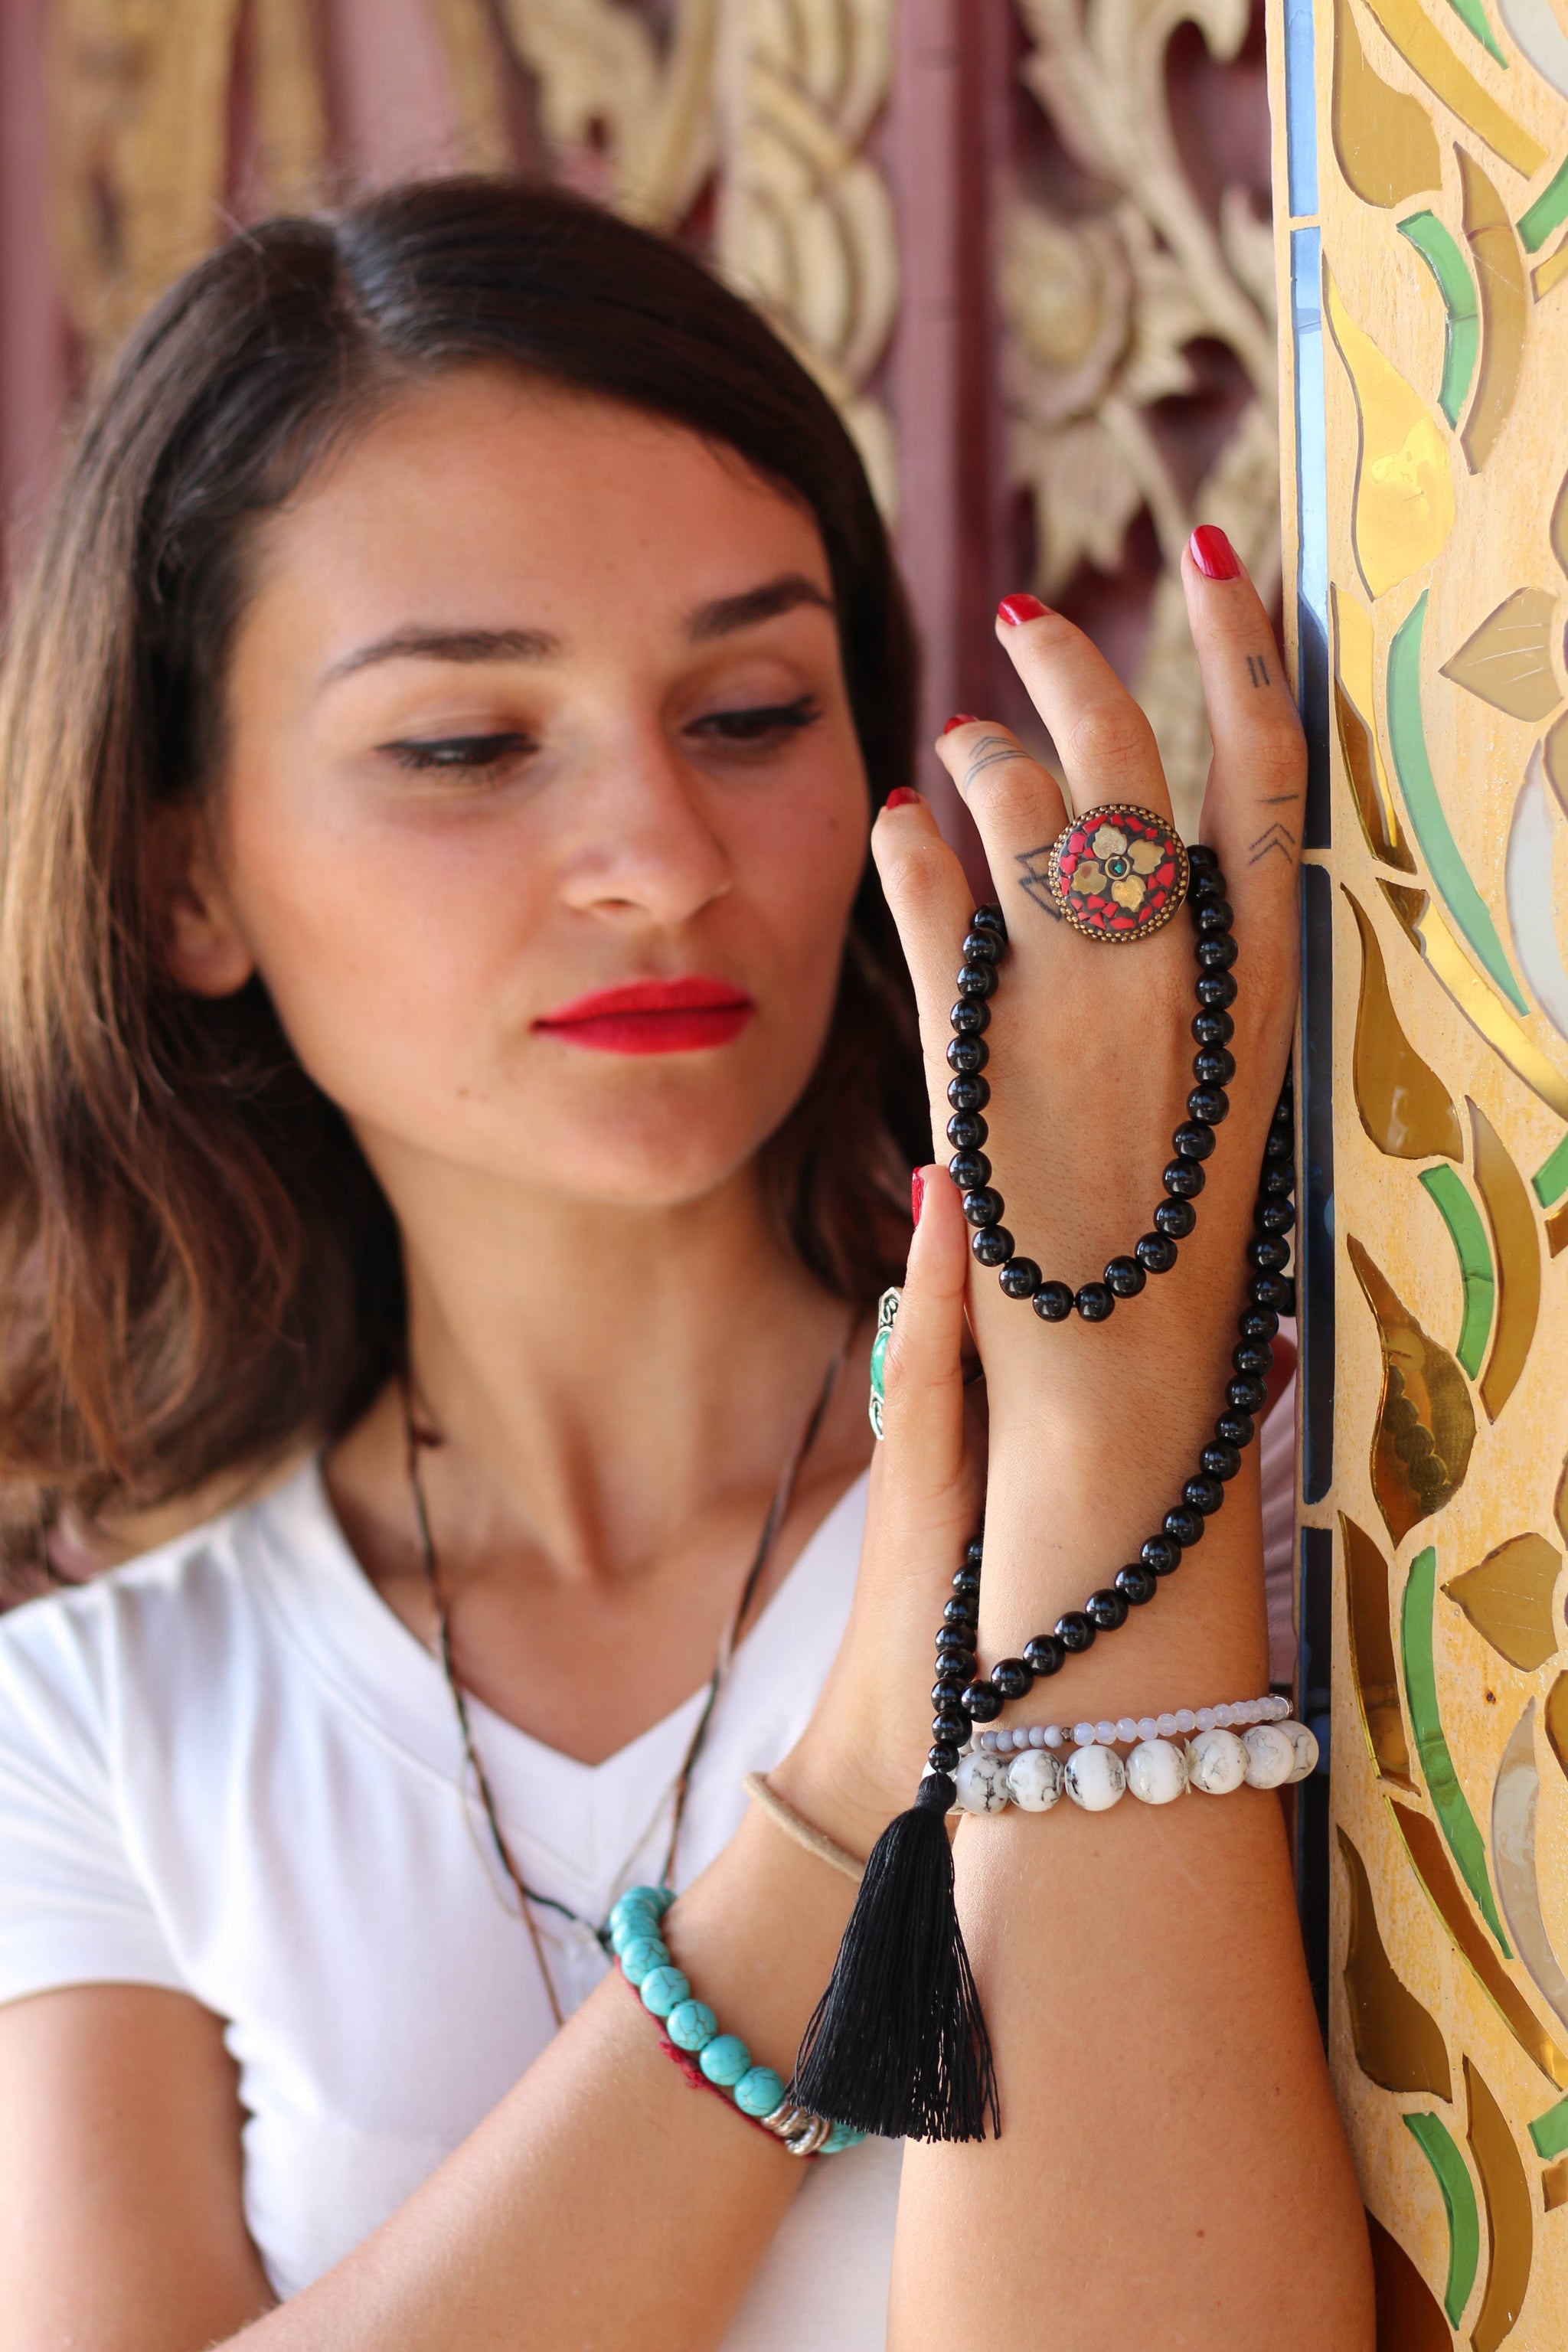 Black Onyx Buddhist Mala Beads Necklace with Black Tassels - One Tribe  Apparel